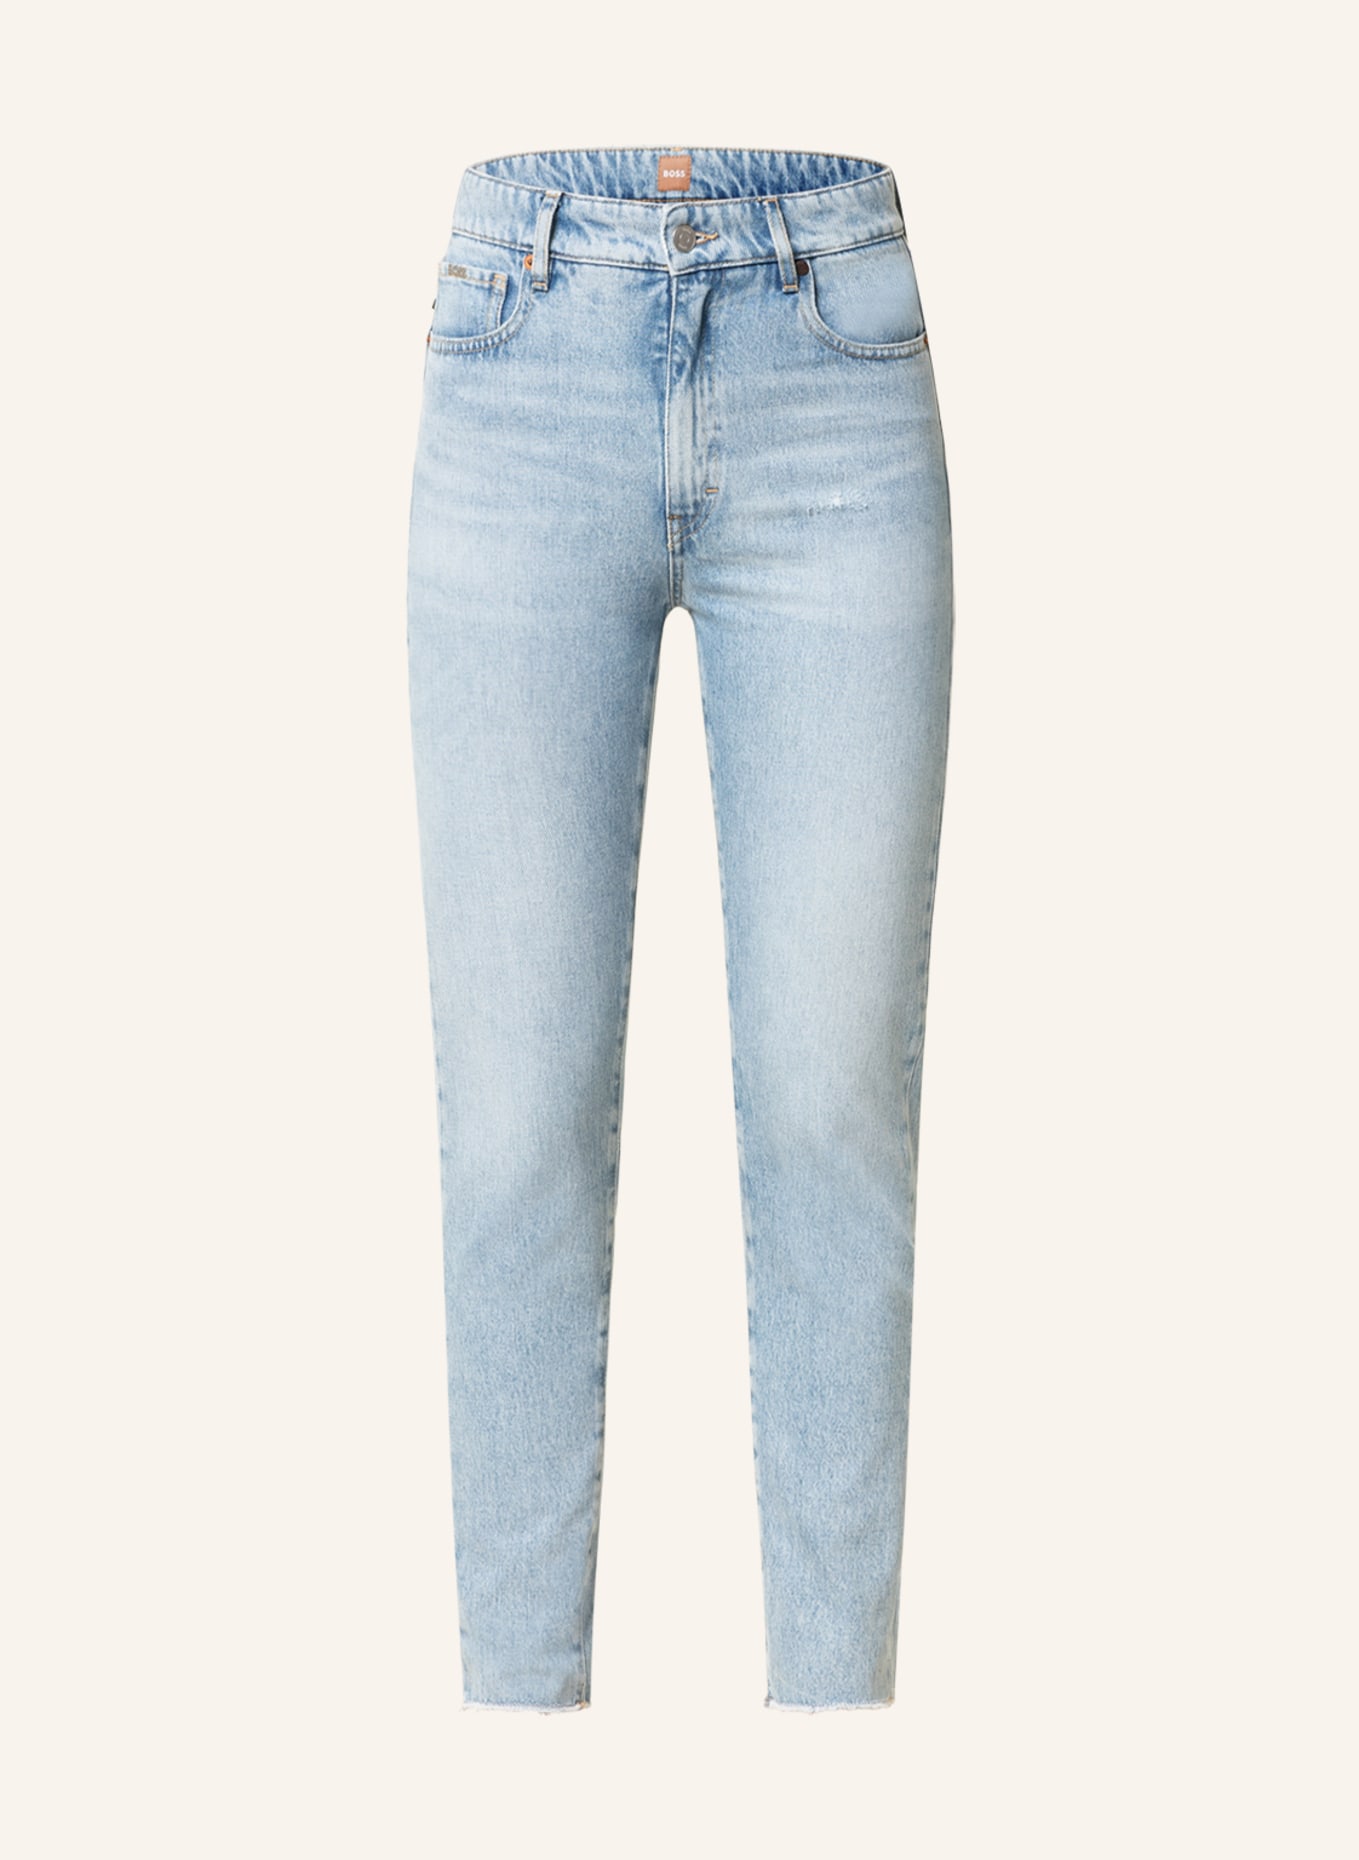 BOSS Jeans STRAIGHT TAPERED 4.1, Farbe: 447 TURQUOISE/AQUA (Bild 1)